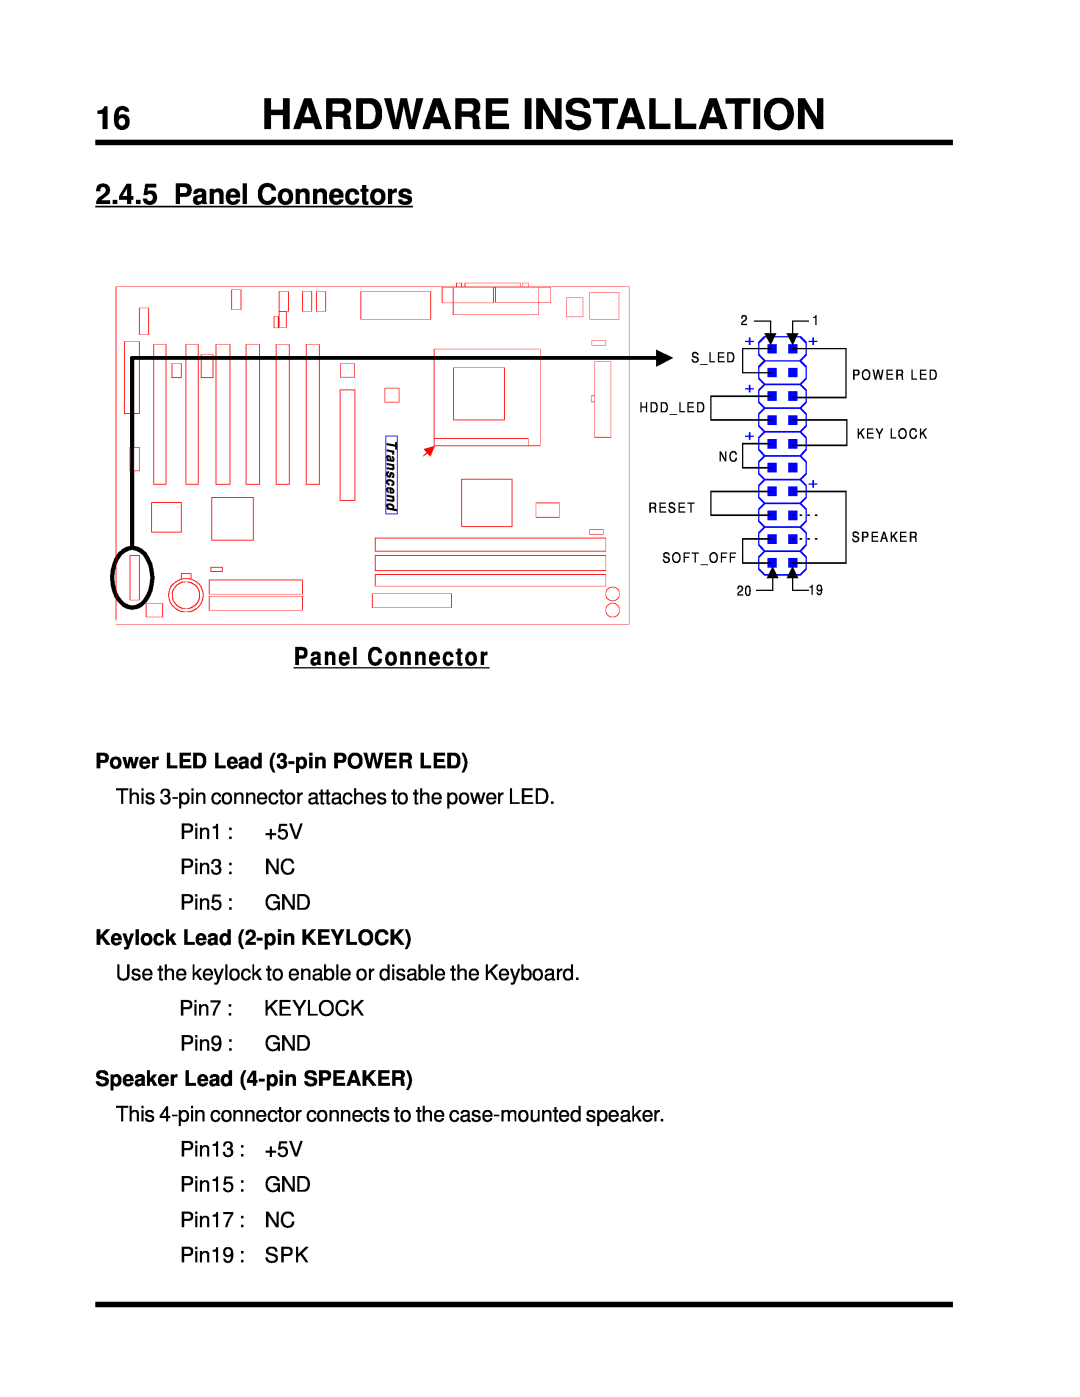 Intel TS-ASP3 user manual Hardware Installation, Panel Connectors 